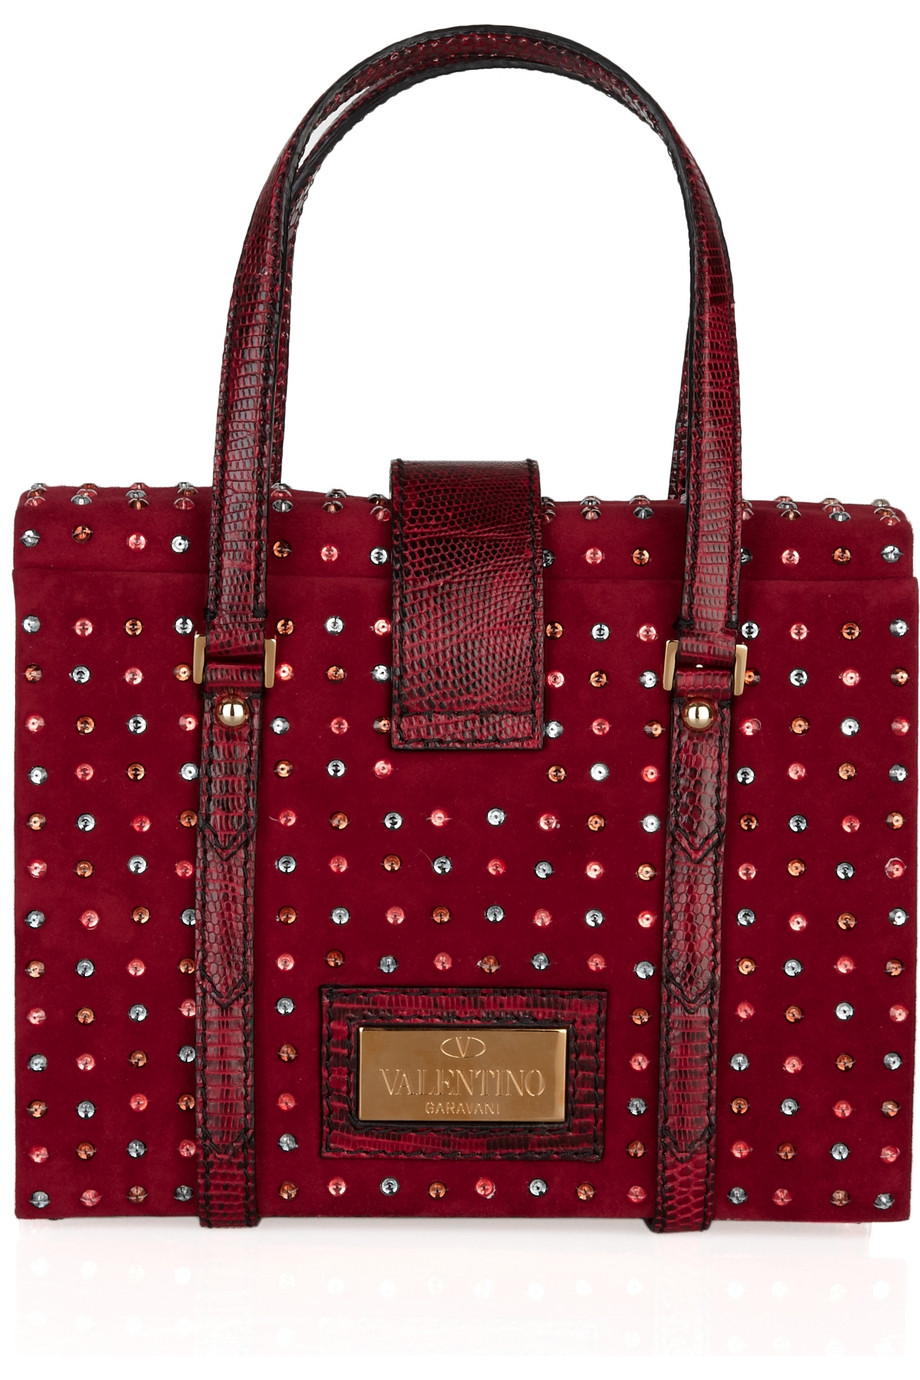 Valentino Crystal-embellished Alligator and Suede Handbag in Red - Lyst